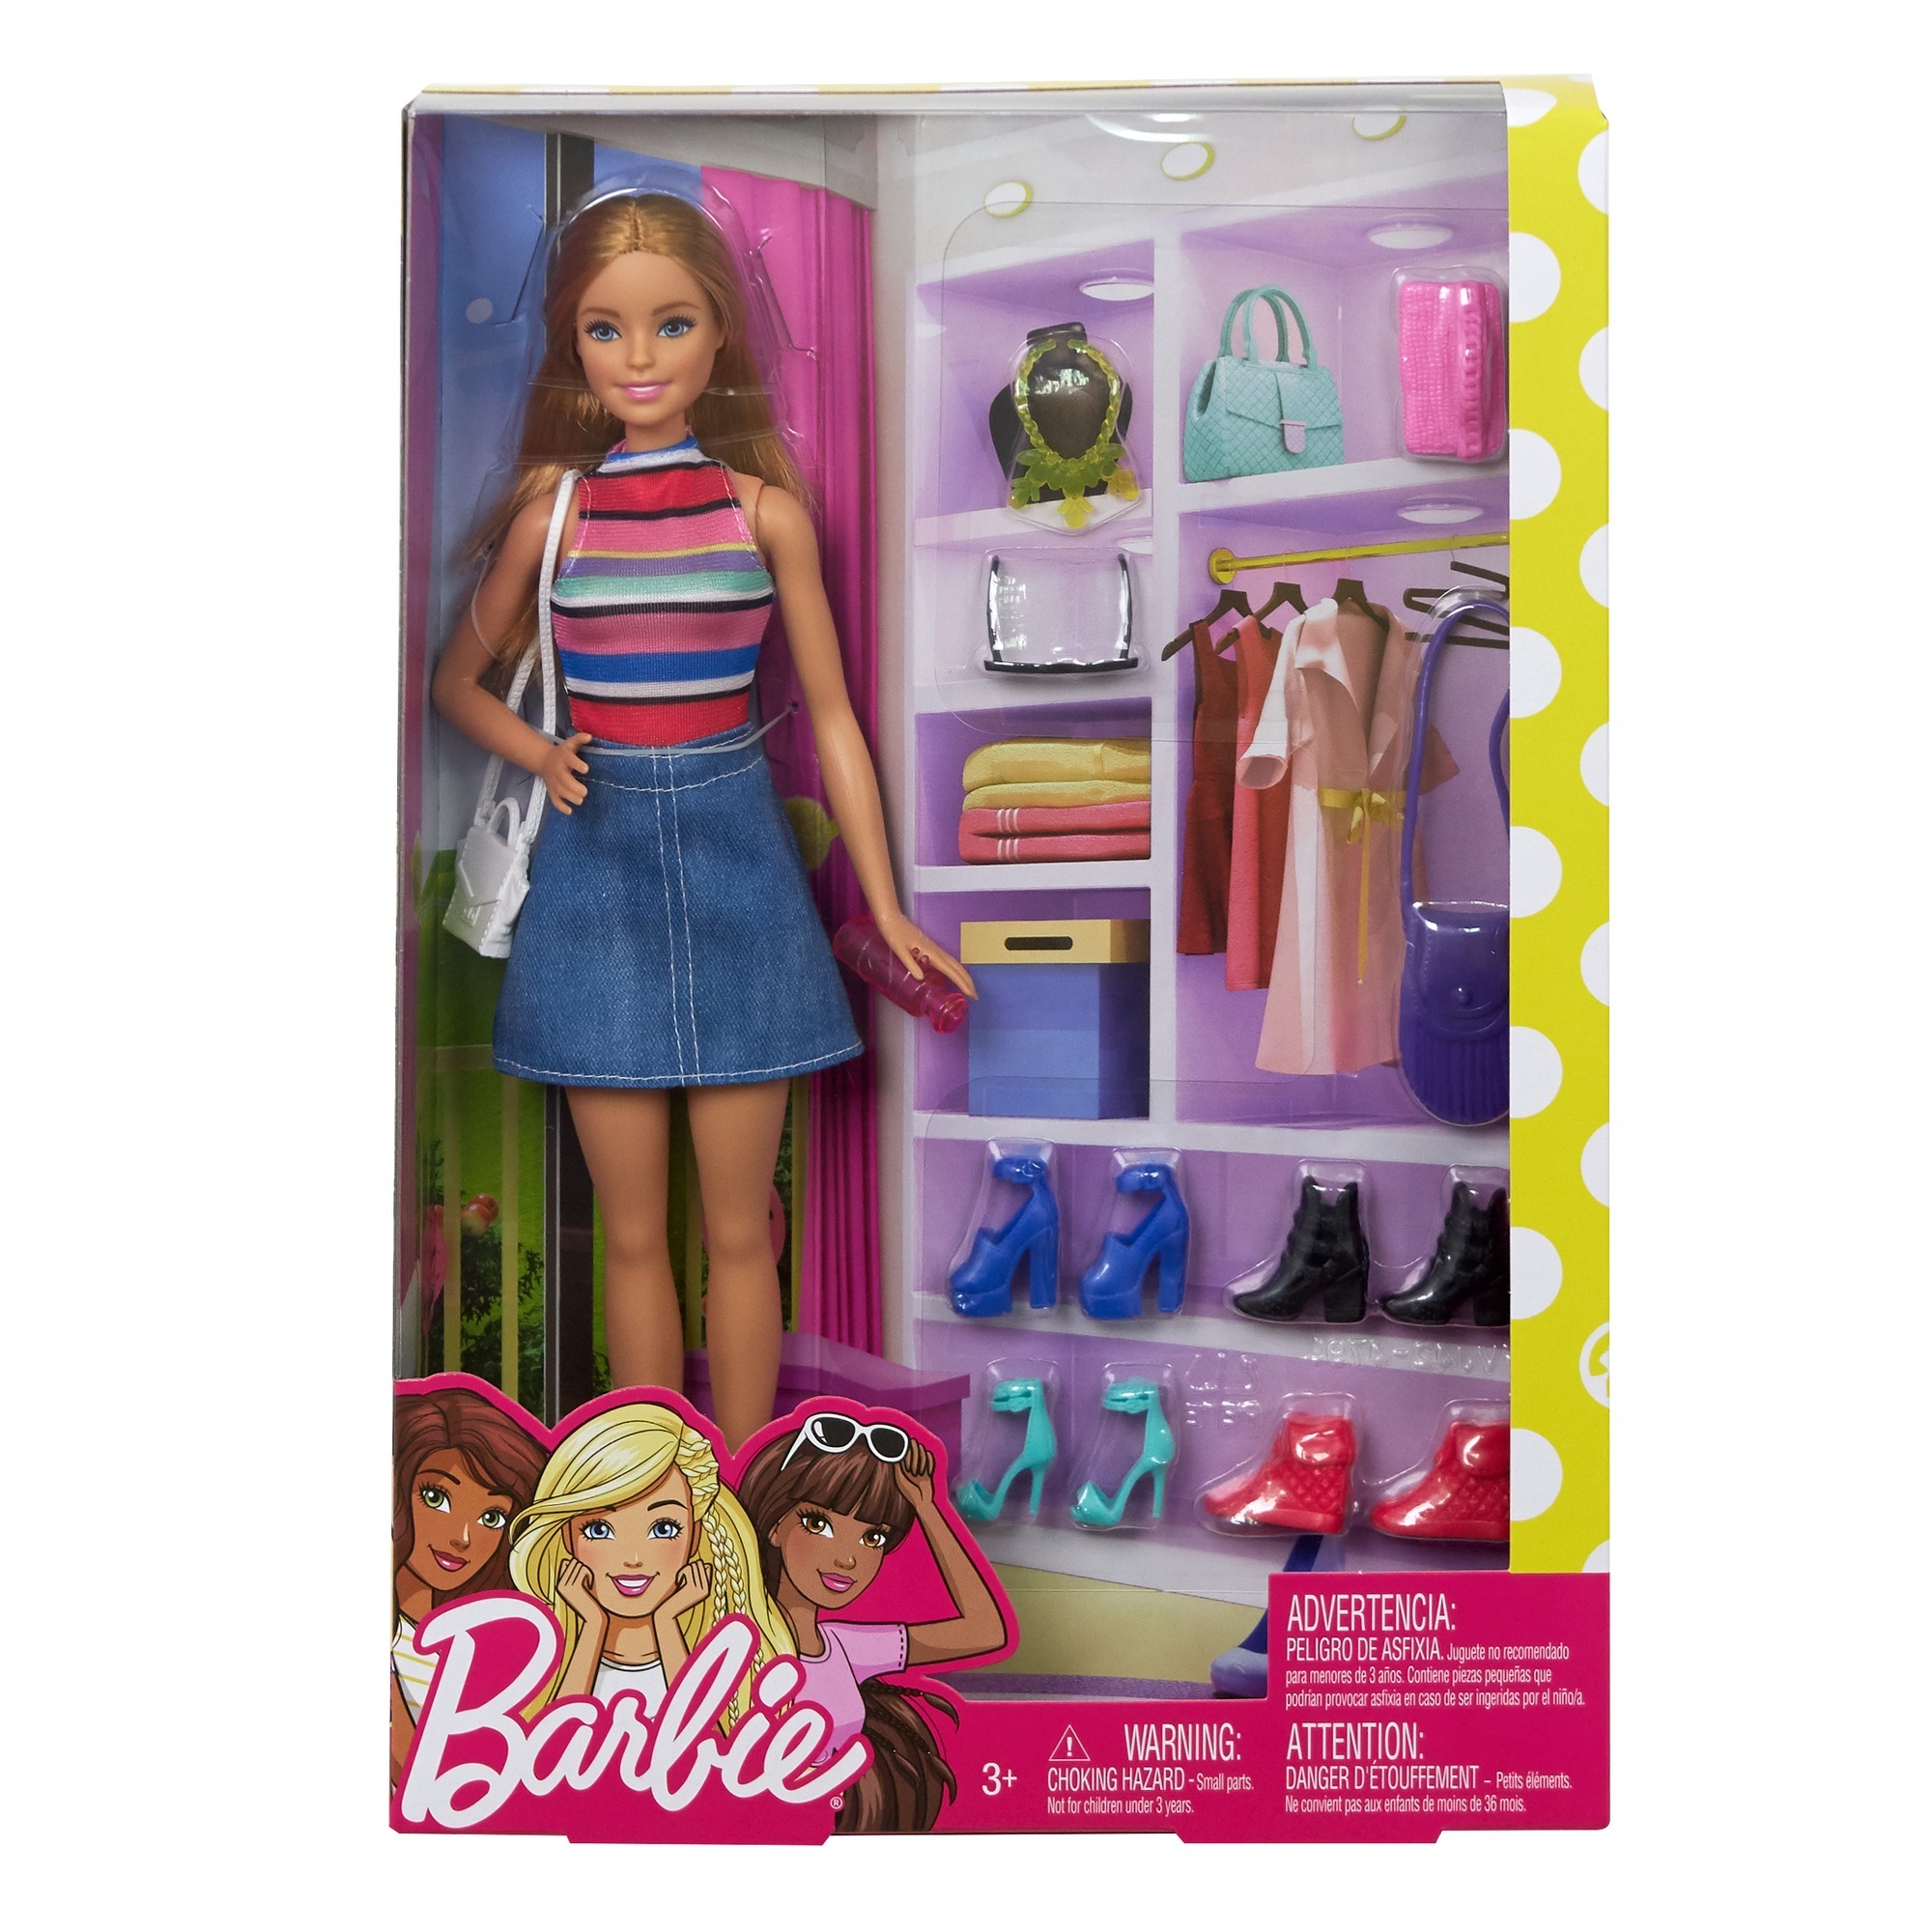 Barbie Pop/Schoen (Blond)